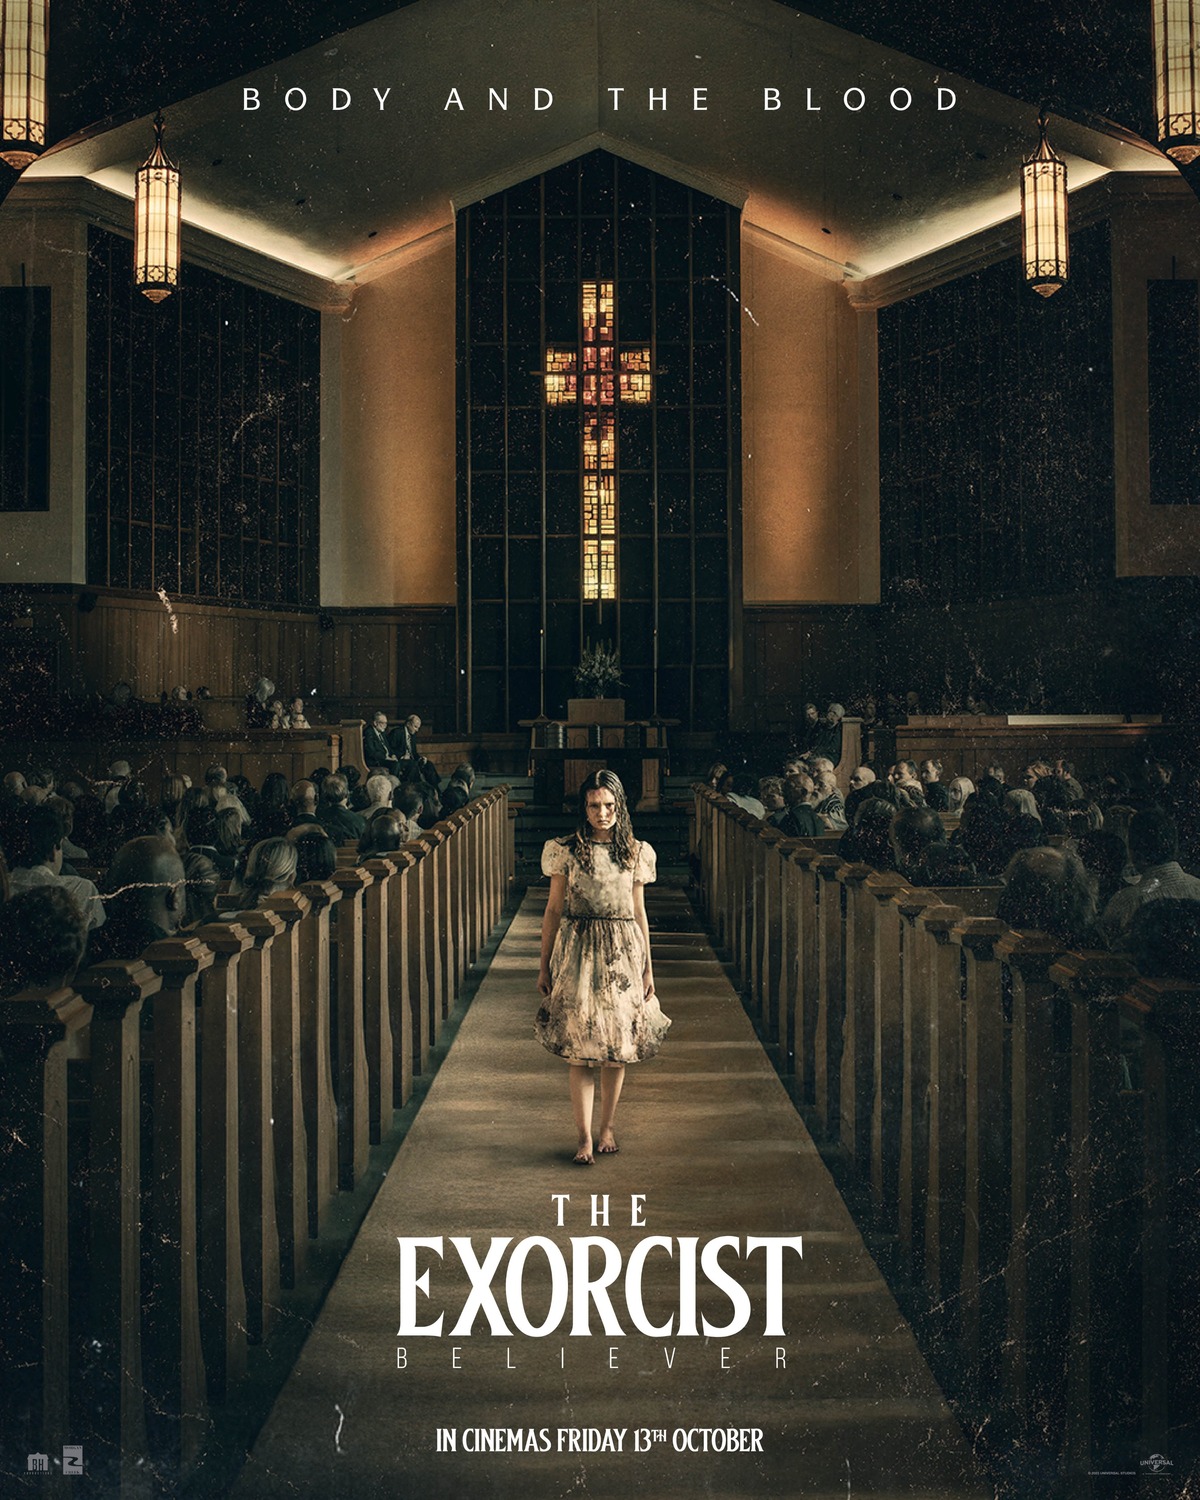 CinePOP on X: Cartaz do terror sobre exorcismo #ALuzDoDemônio